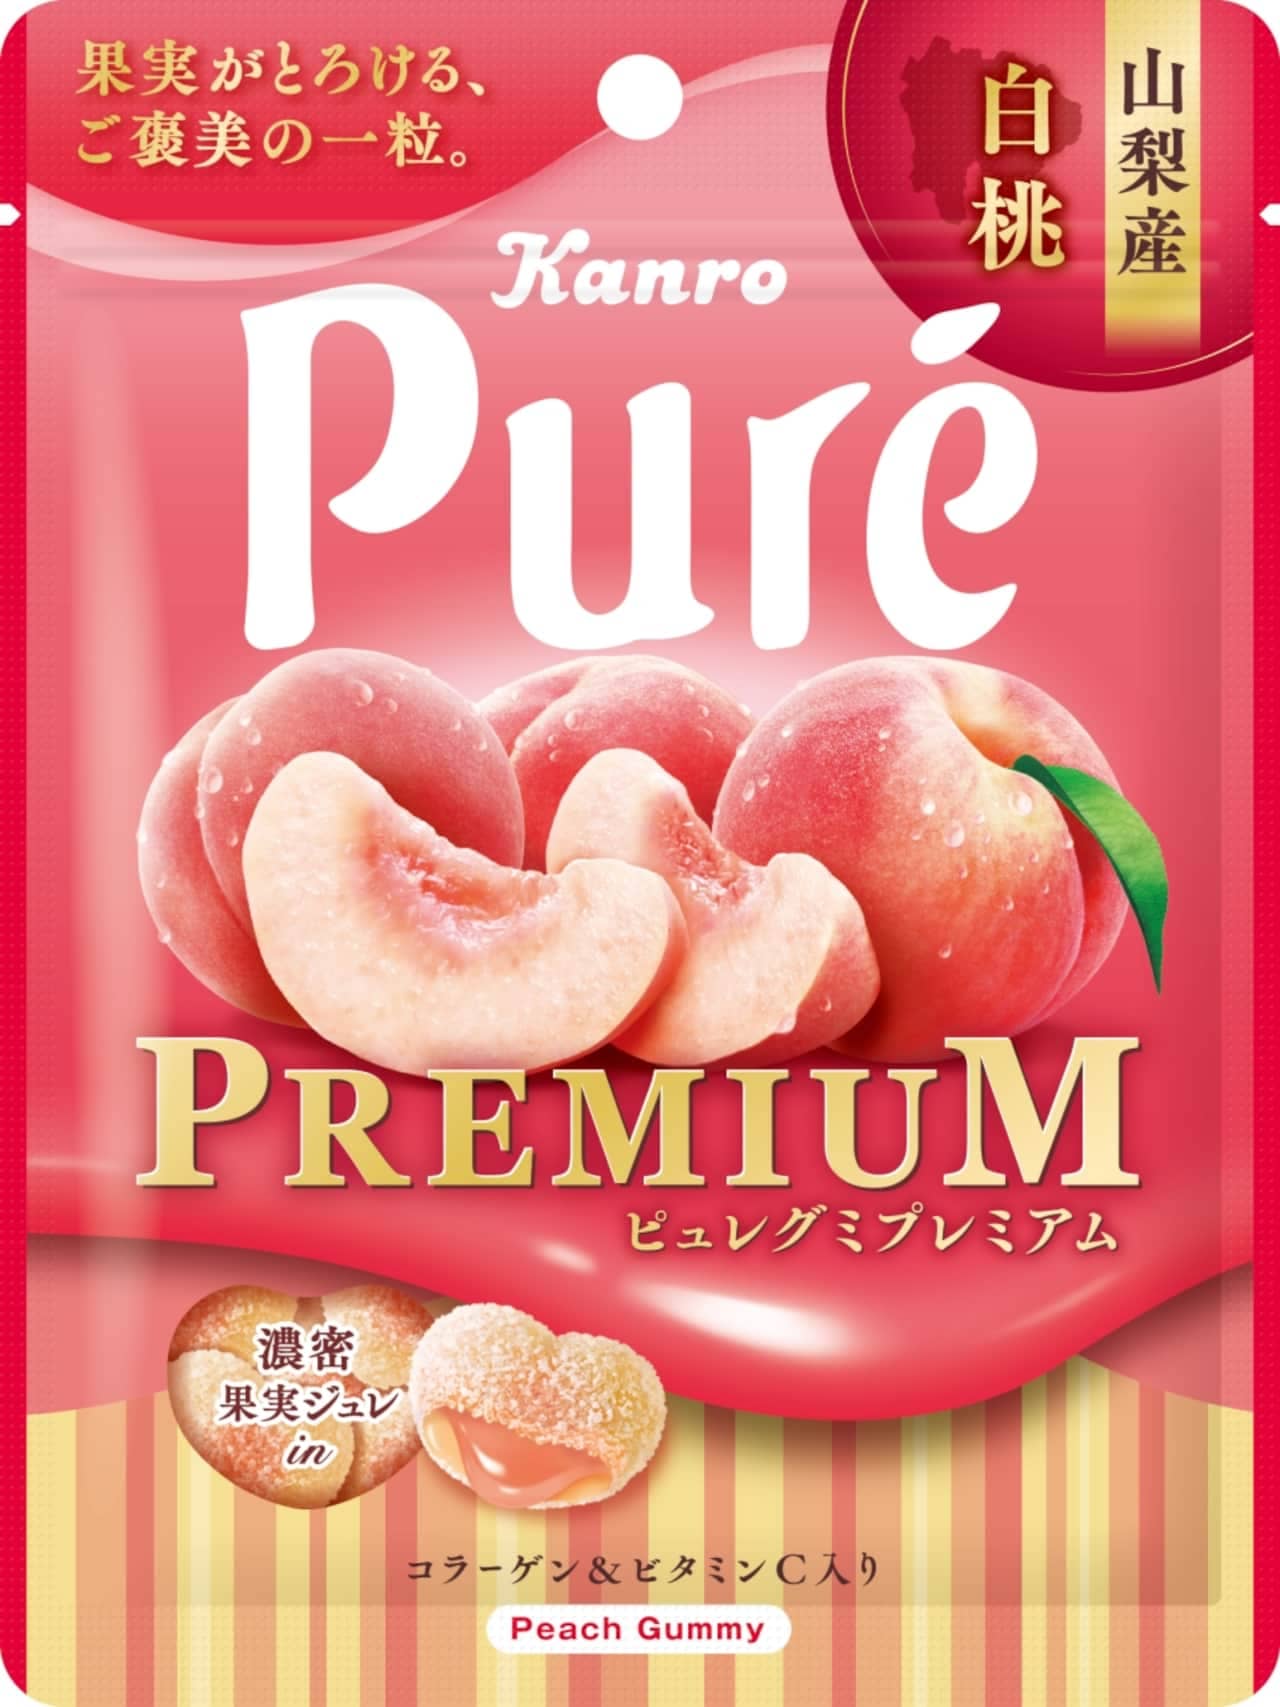 Kanro "Puree Gummi Premium Yamanashi Shiroko Peach" package